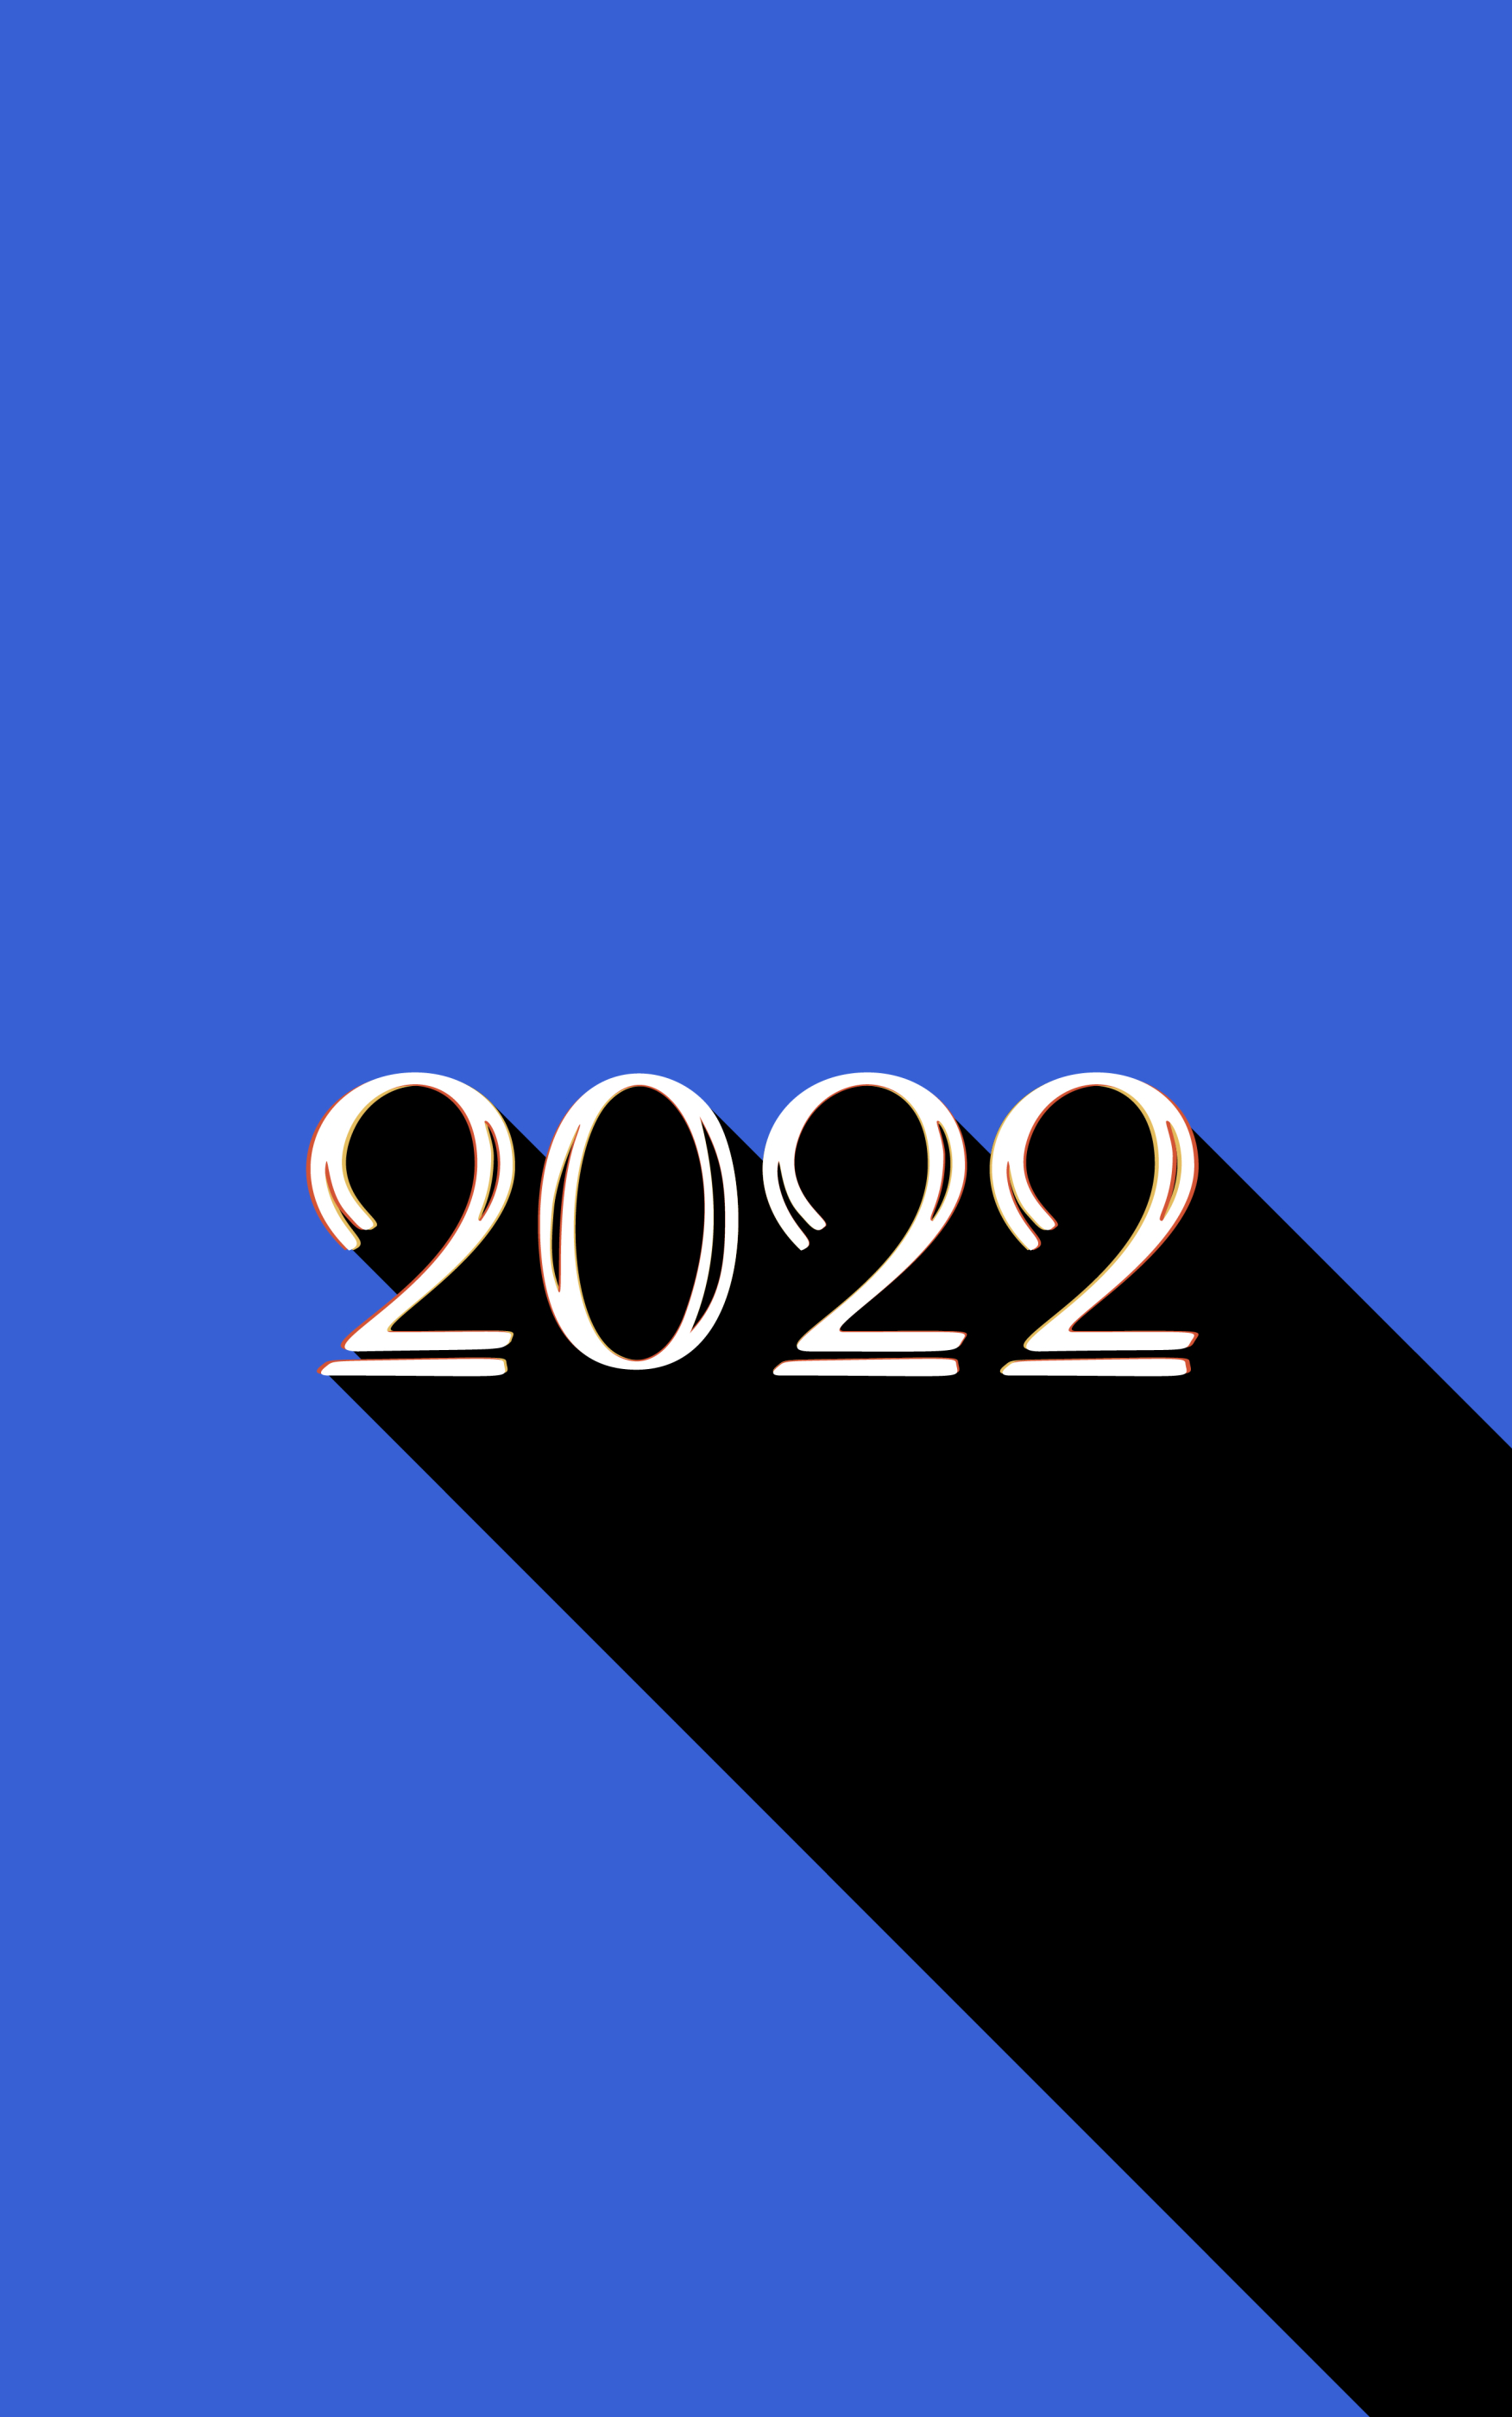 Simple 2022